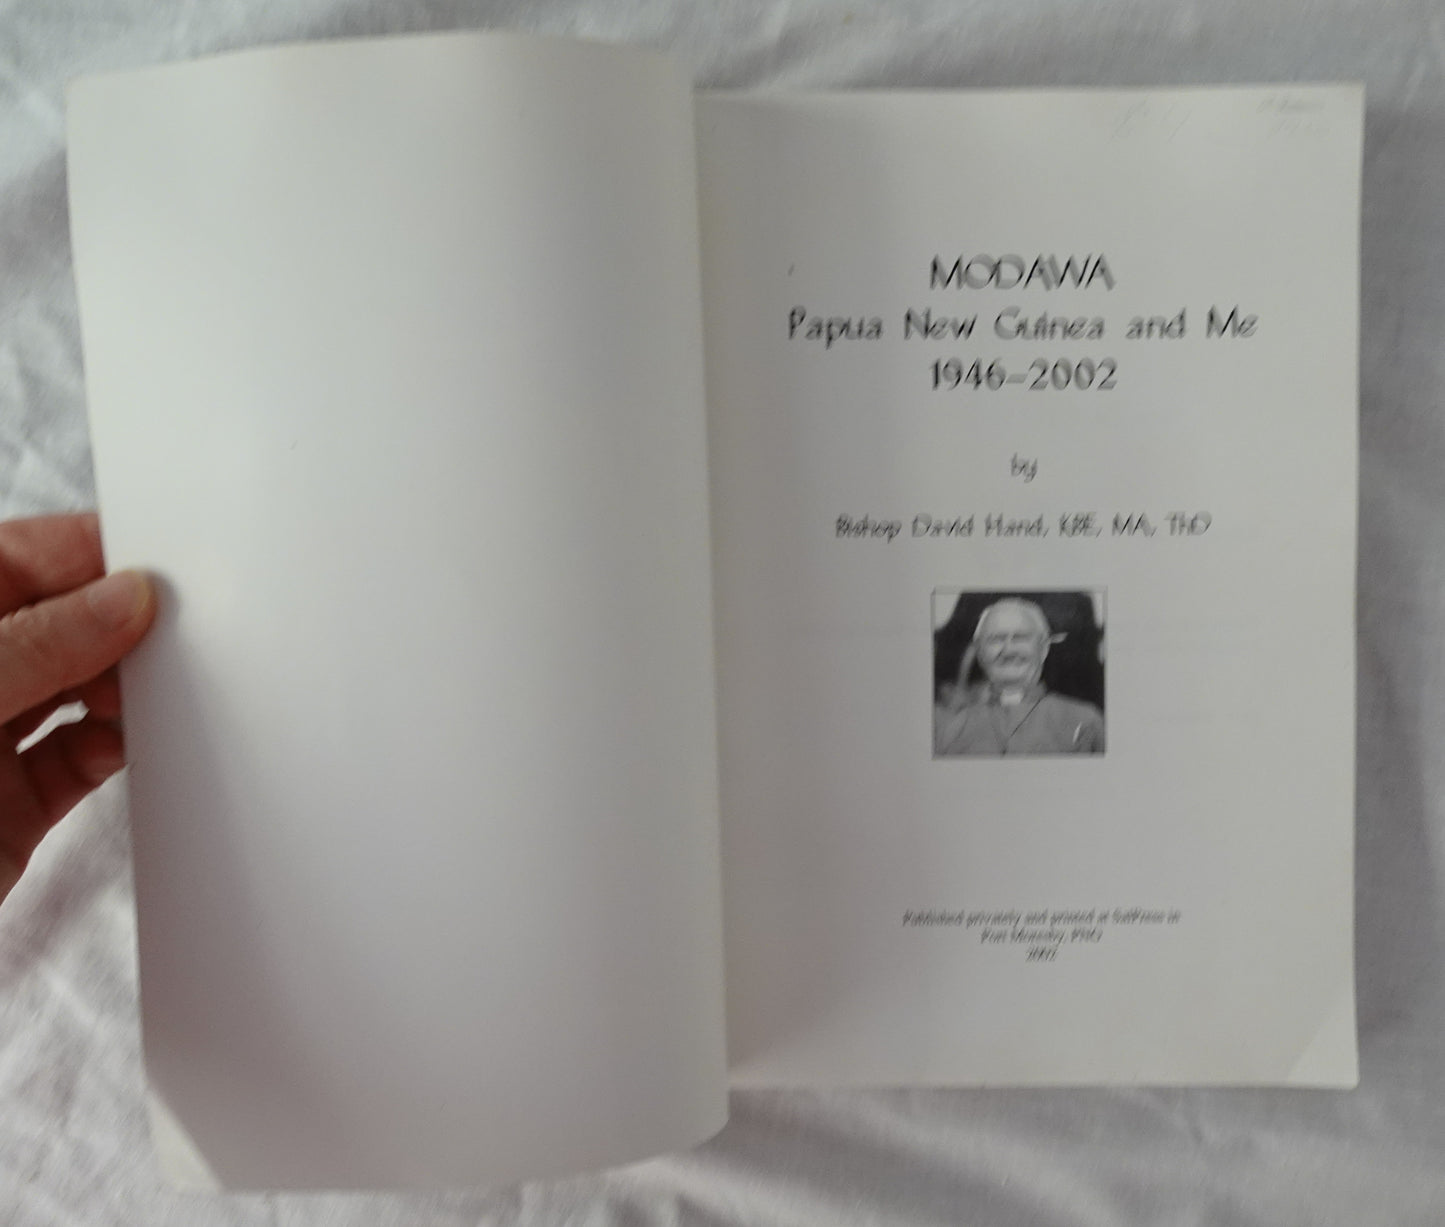 MODAWA by Bishop David Hand